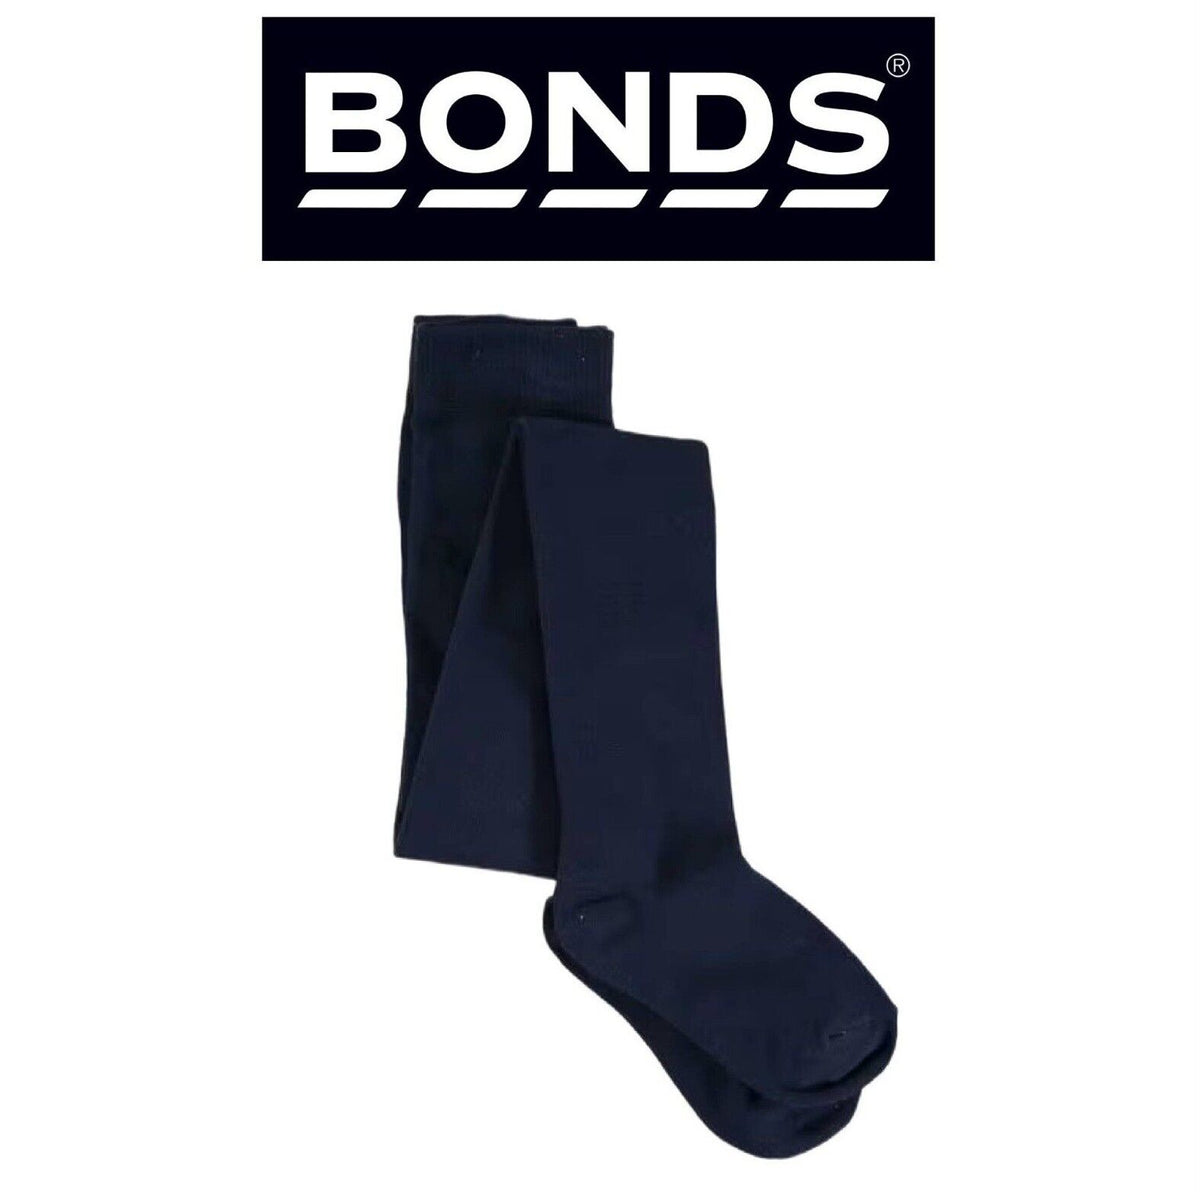 Bonds Kids School Tights Lycra Soft Waistband for Comfort Durable R6312N